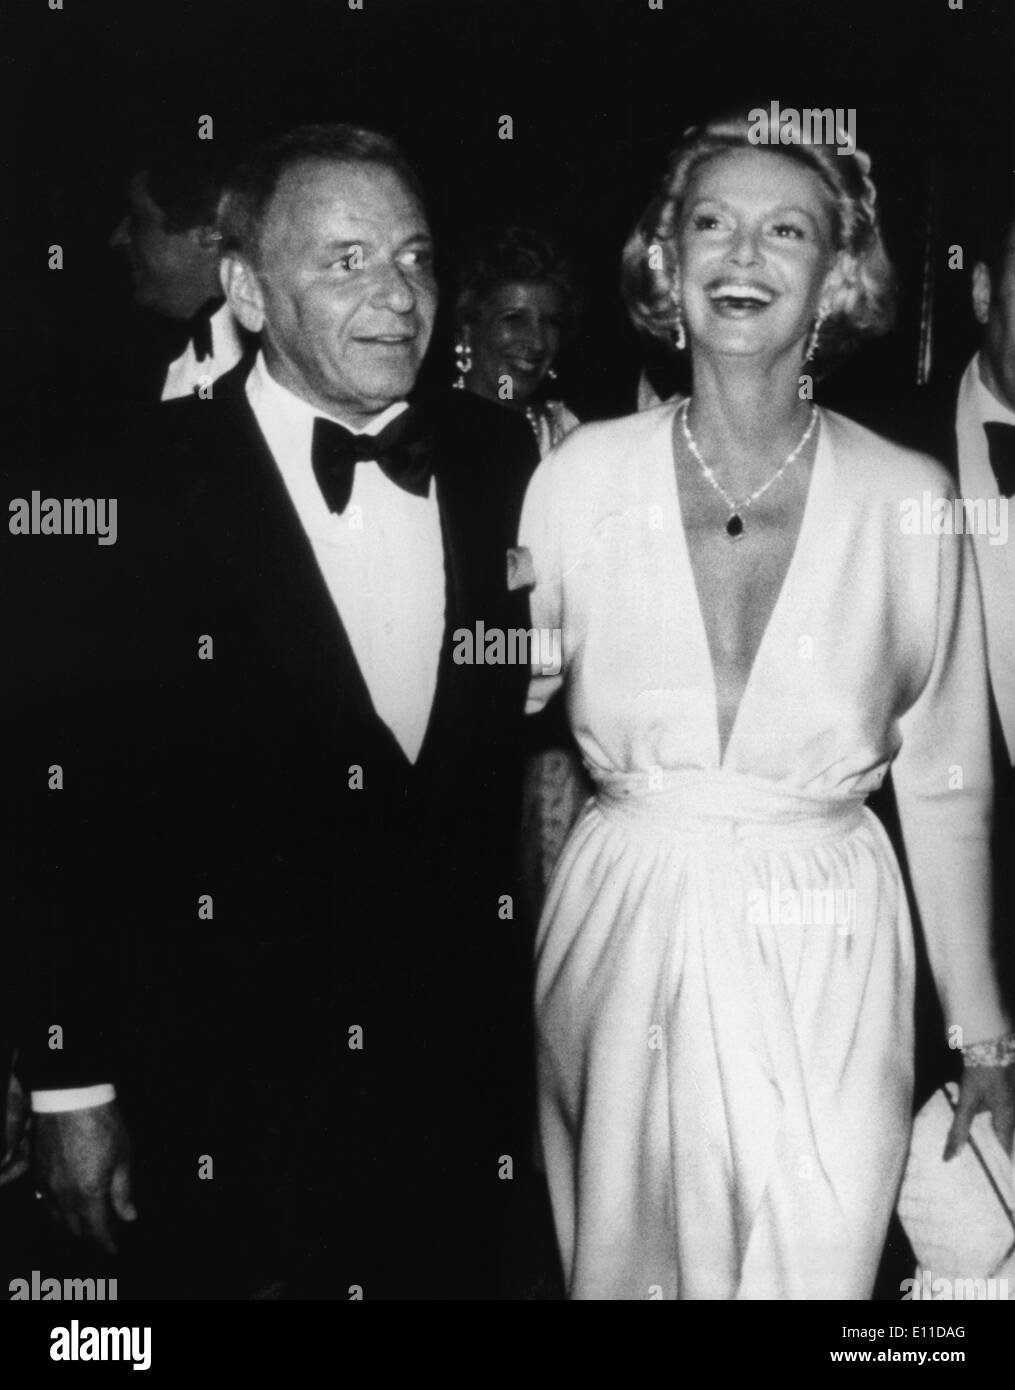 Apr 27, 1977; New York, NY, USA; Singer FRANK SINATRA with wife BARBARA at the Robert Merrill at the Waldorf Historia.. Stock Photo